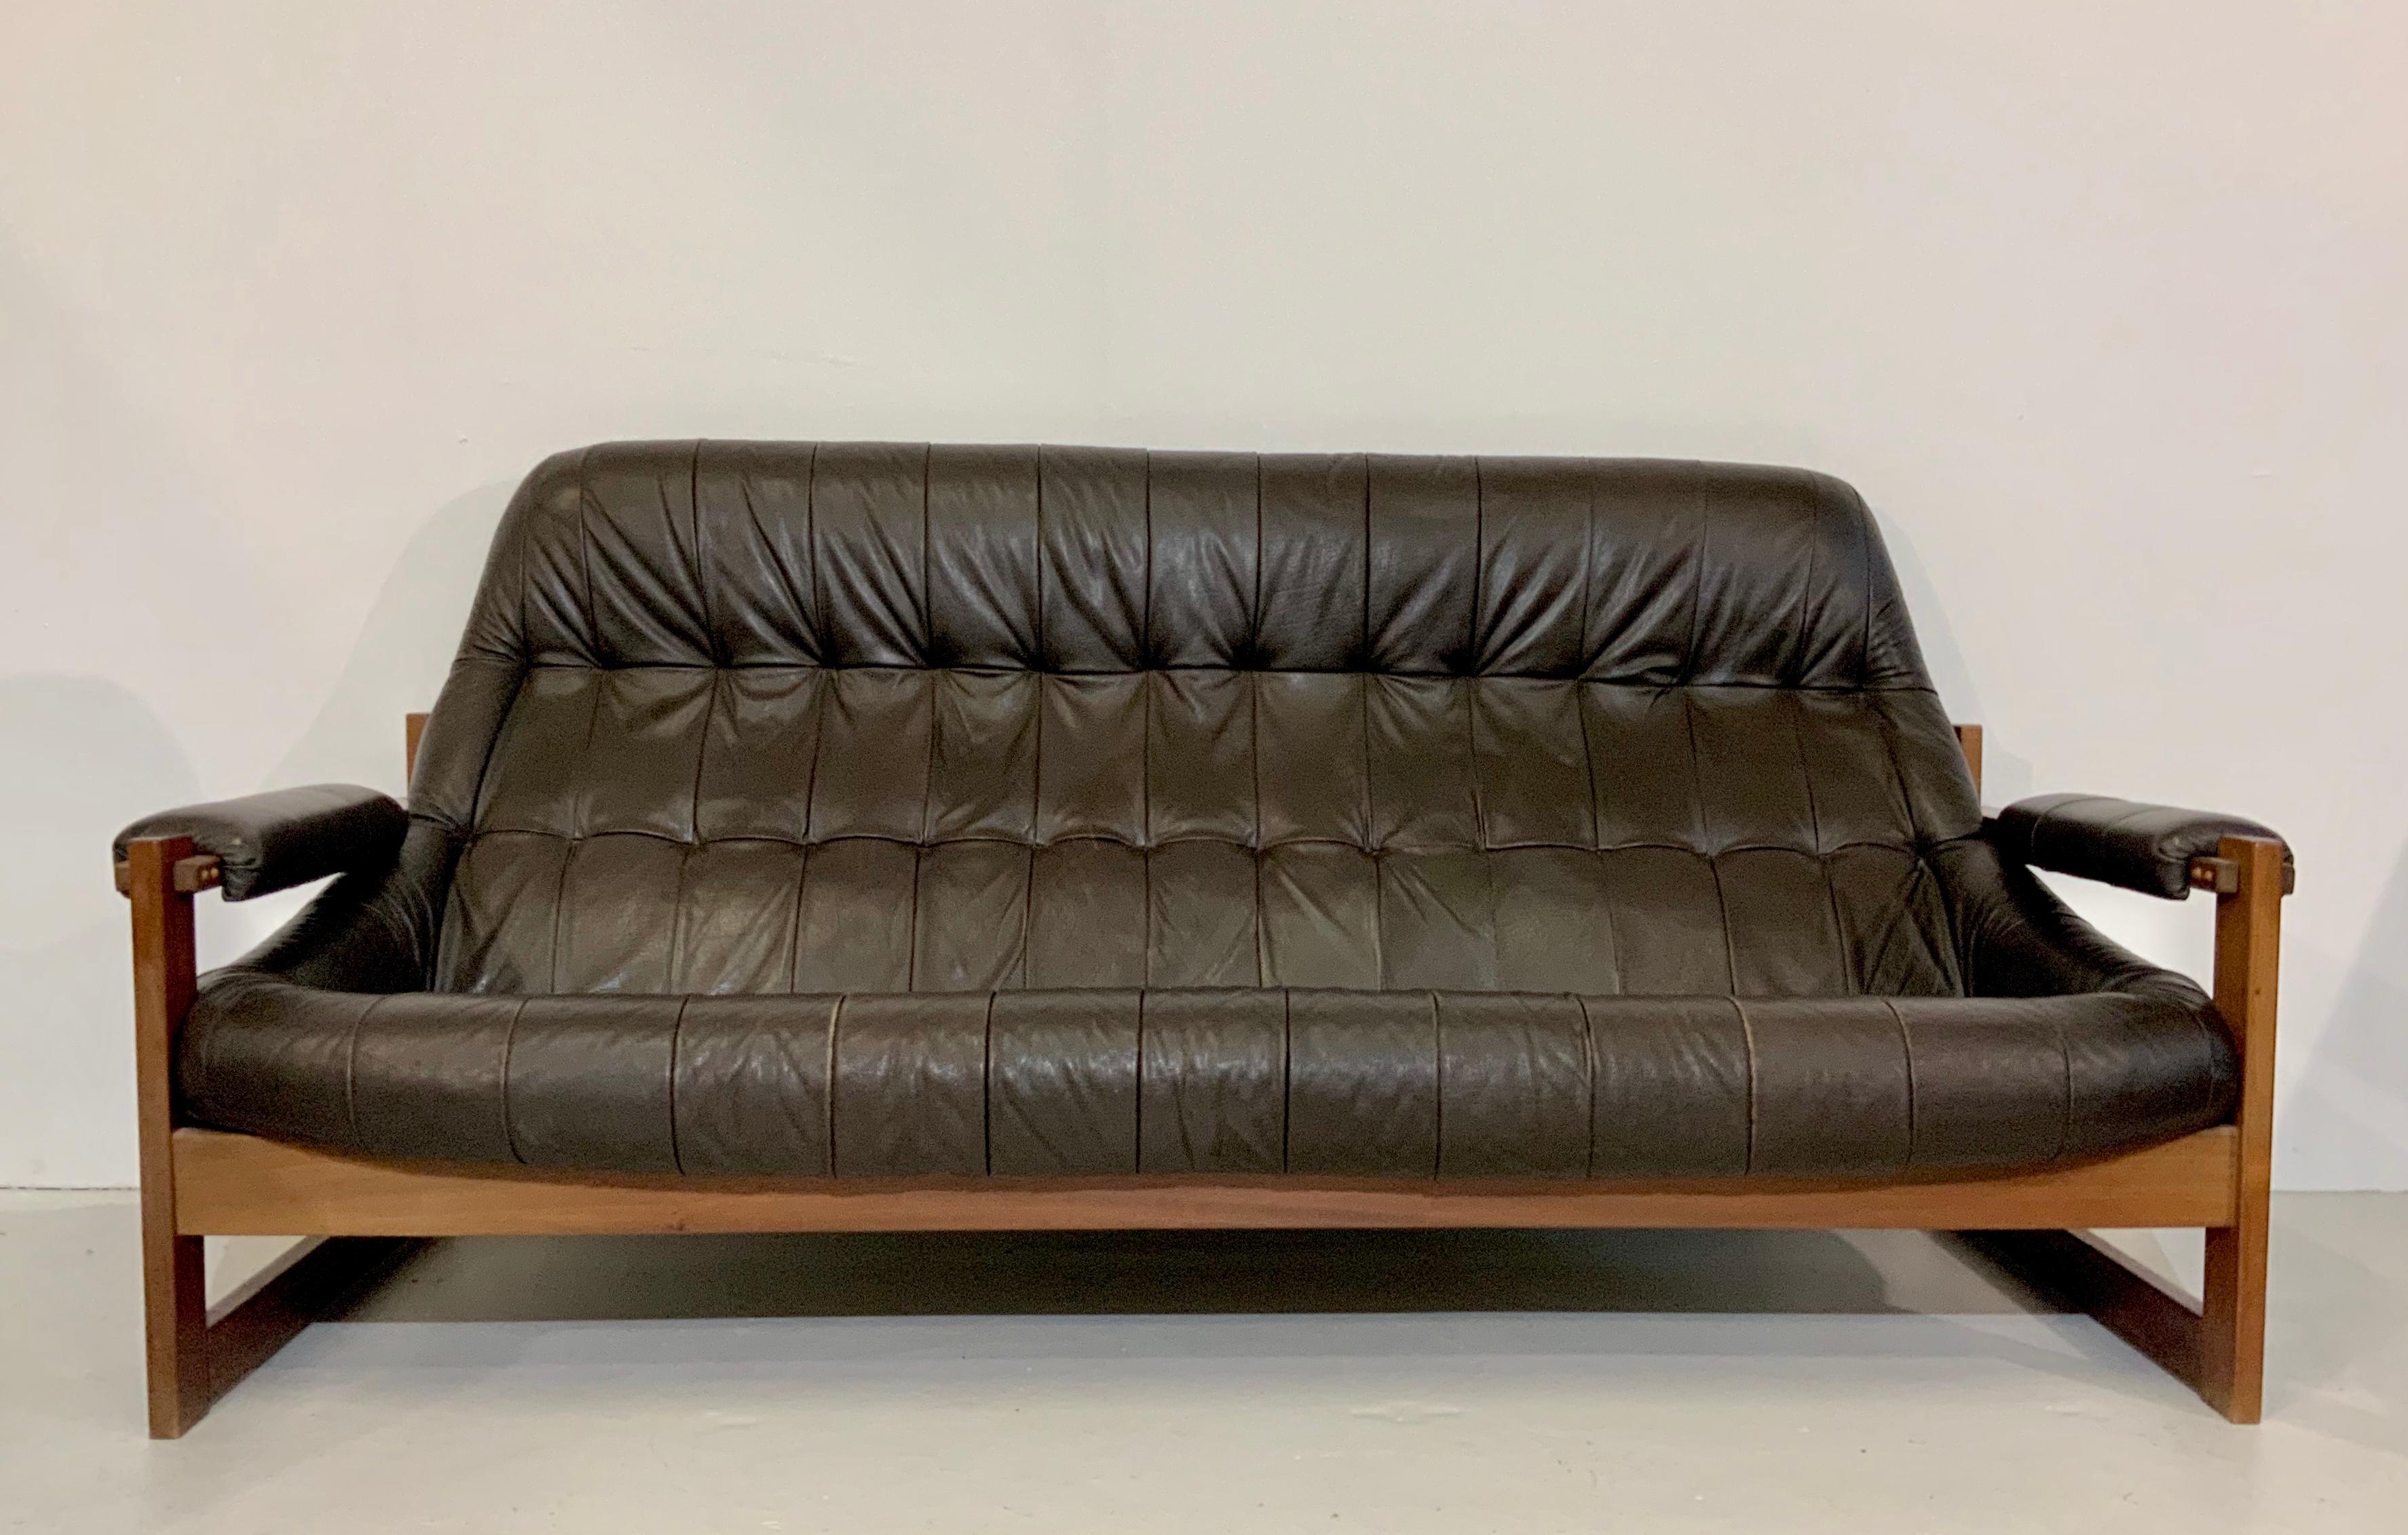 Percival Lafer Brazilian Mid-Century Modern Design Leather Living Room Set 1970s For Sale 3